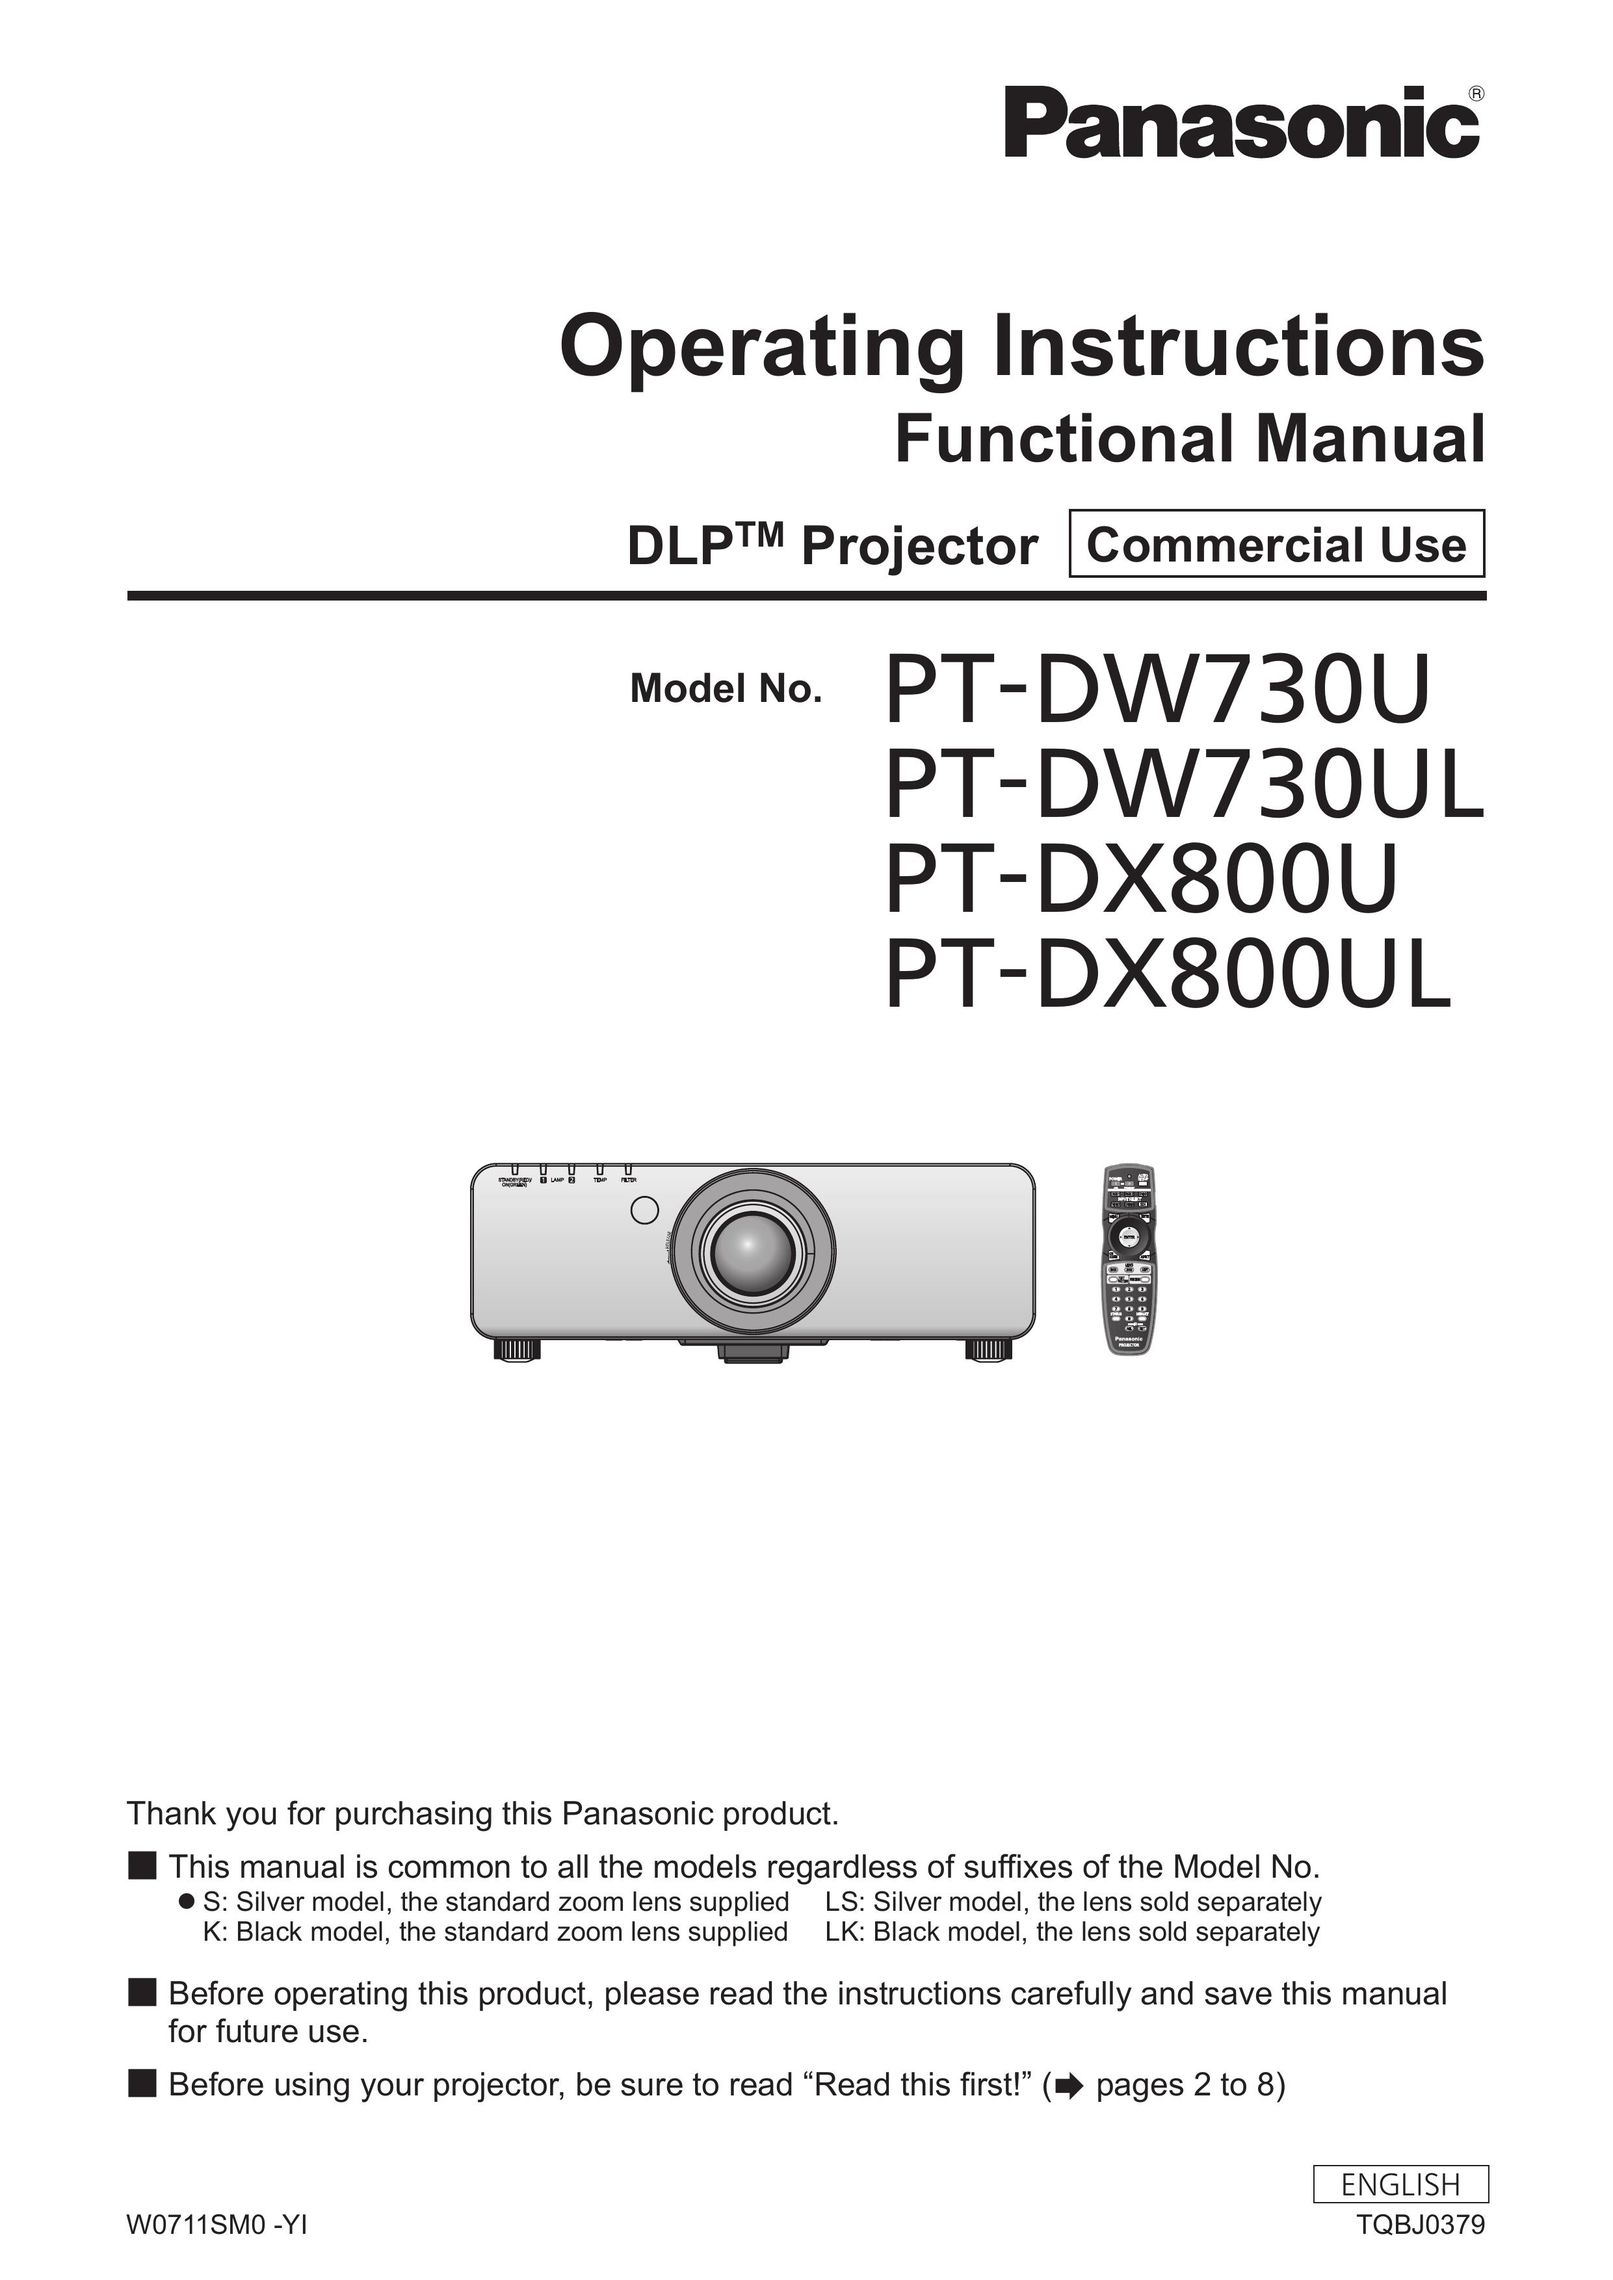 Panasonic PT-DX800UL Home Theater System User Manual